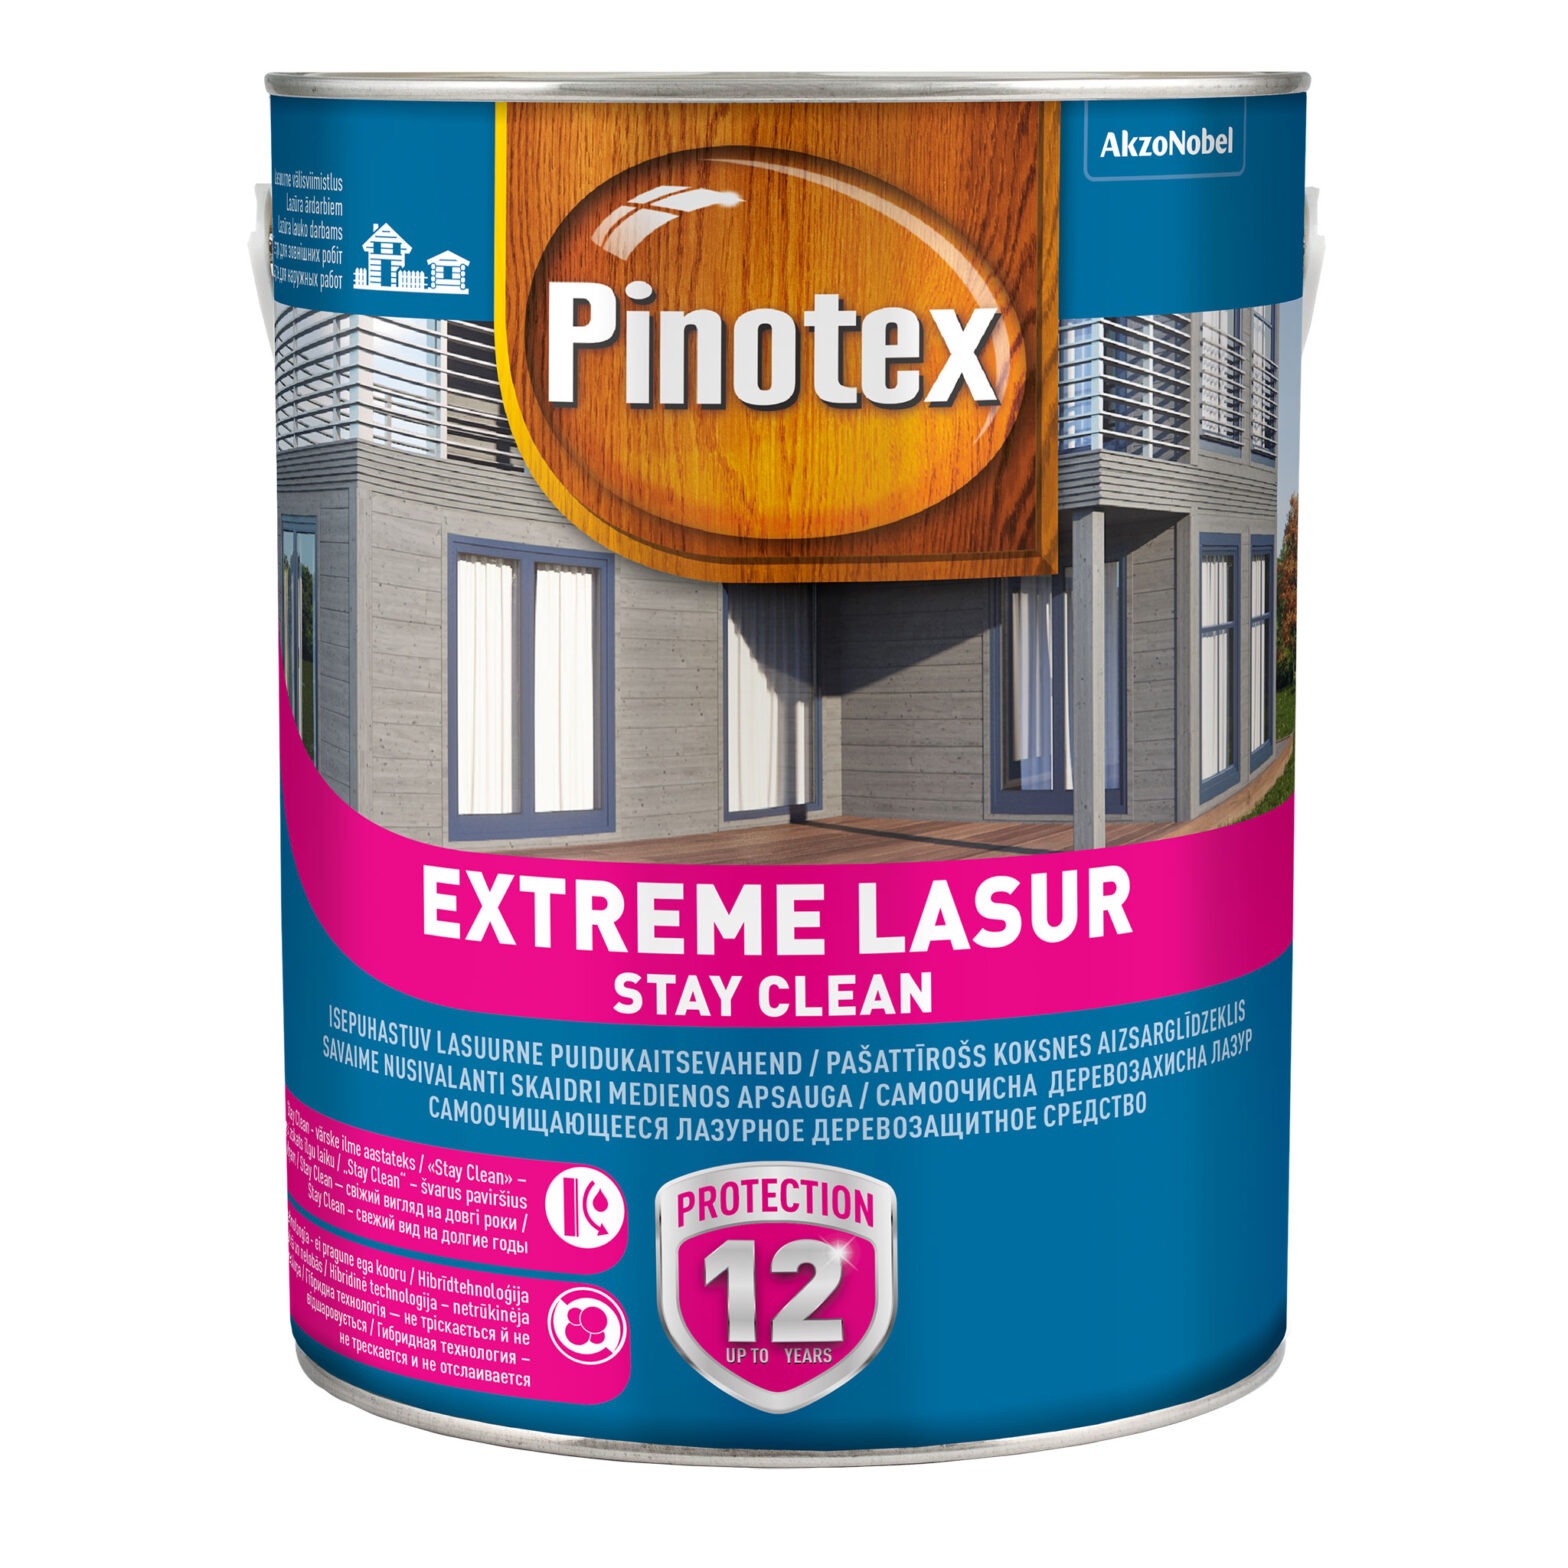 PINOTEX EXTREME LASUR LUMI 3L